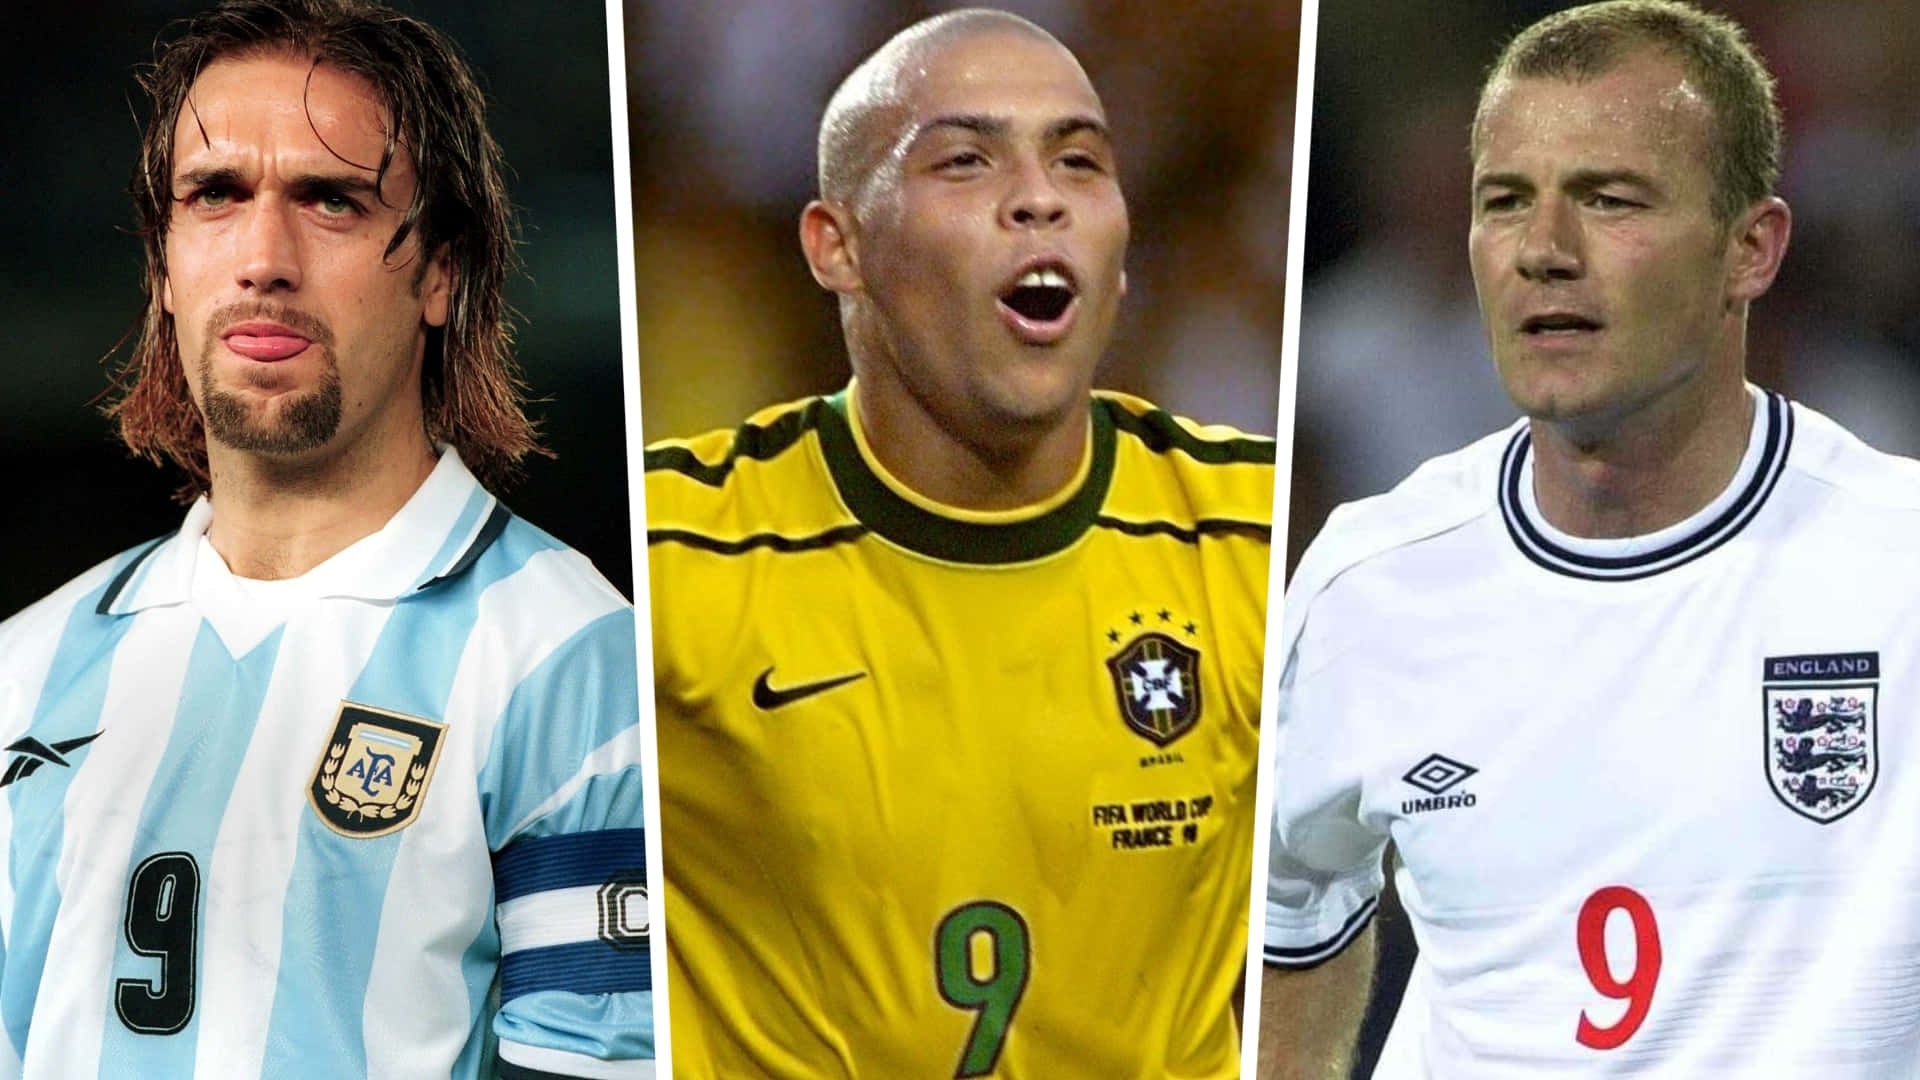 No. 9 Gabriel Batistuta, Ronaldo og Alan Shearer Wallpaper